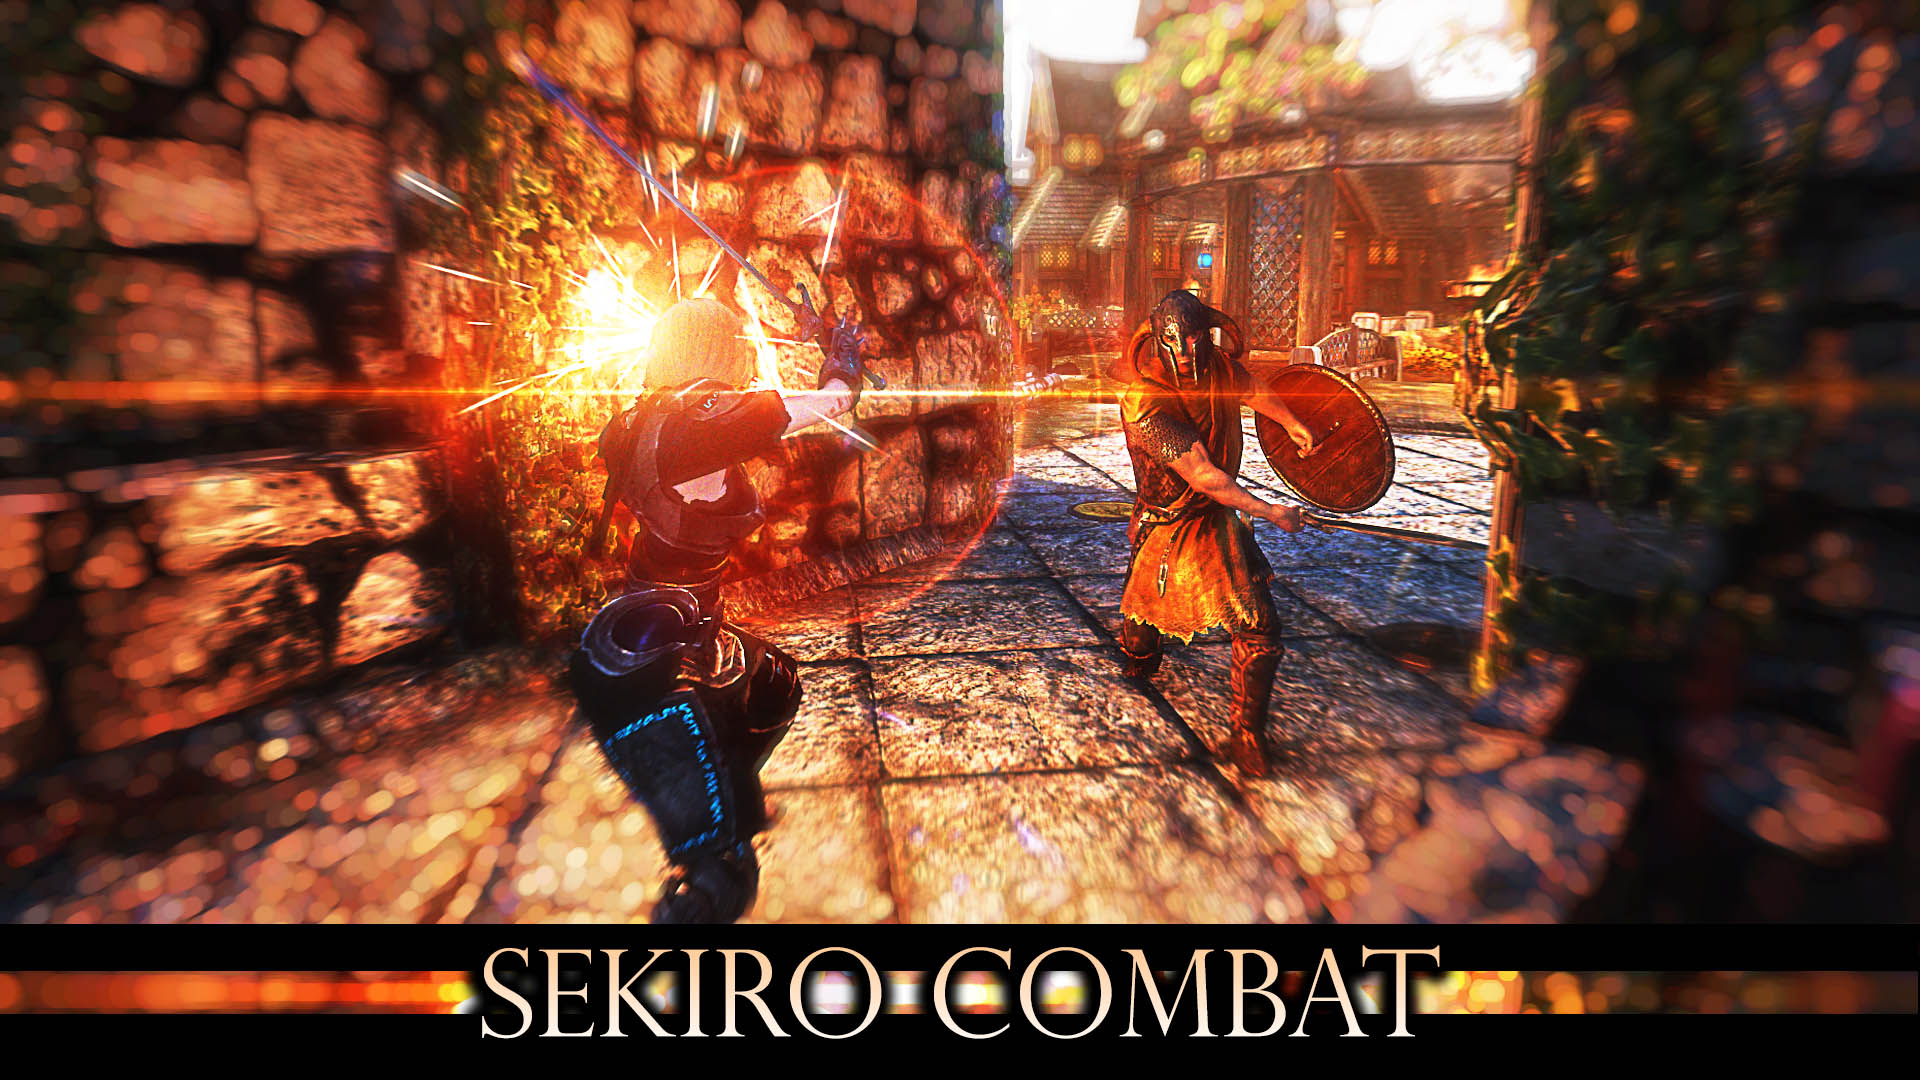 Skyrim gameplay overhaul. Skyrim Sekiro Armor. Skyrim Sekiro Combat. Мод на скайрим боевка Секиро. Скайрим мод Sekiro.